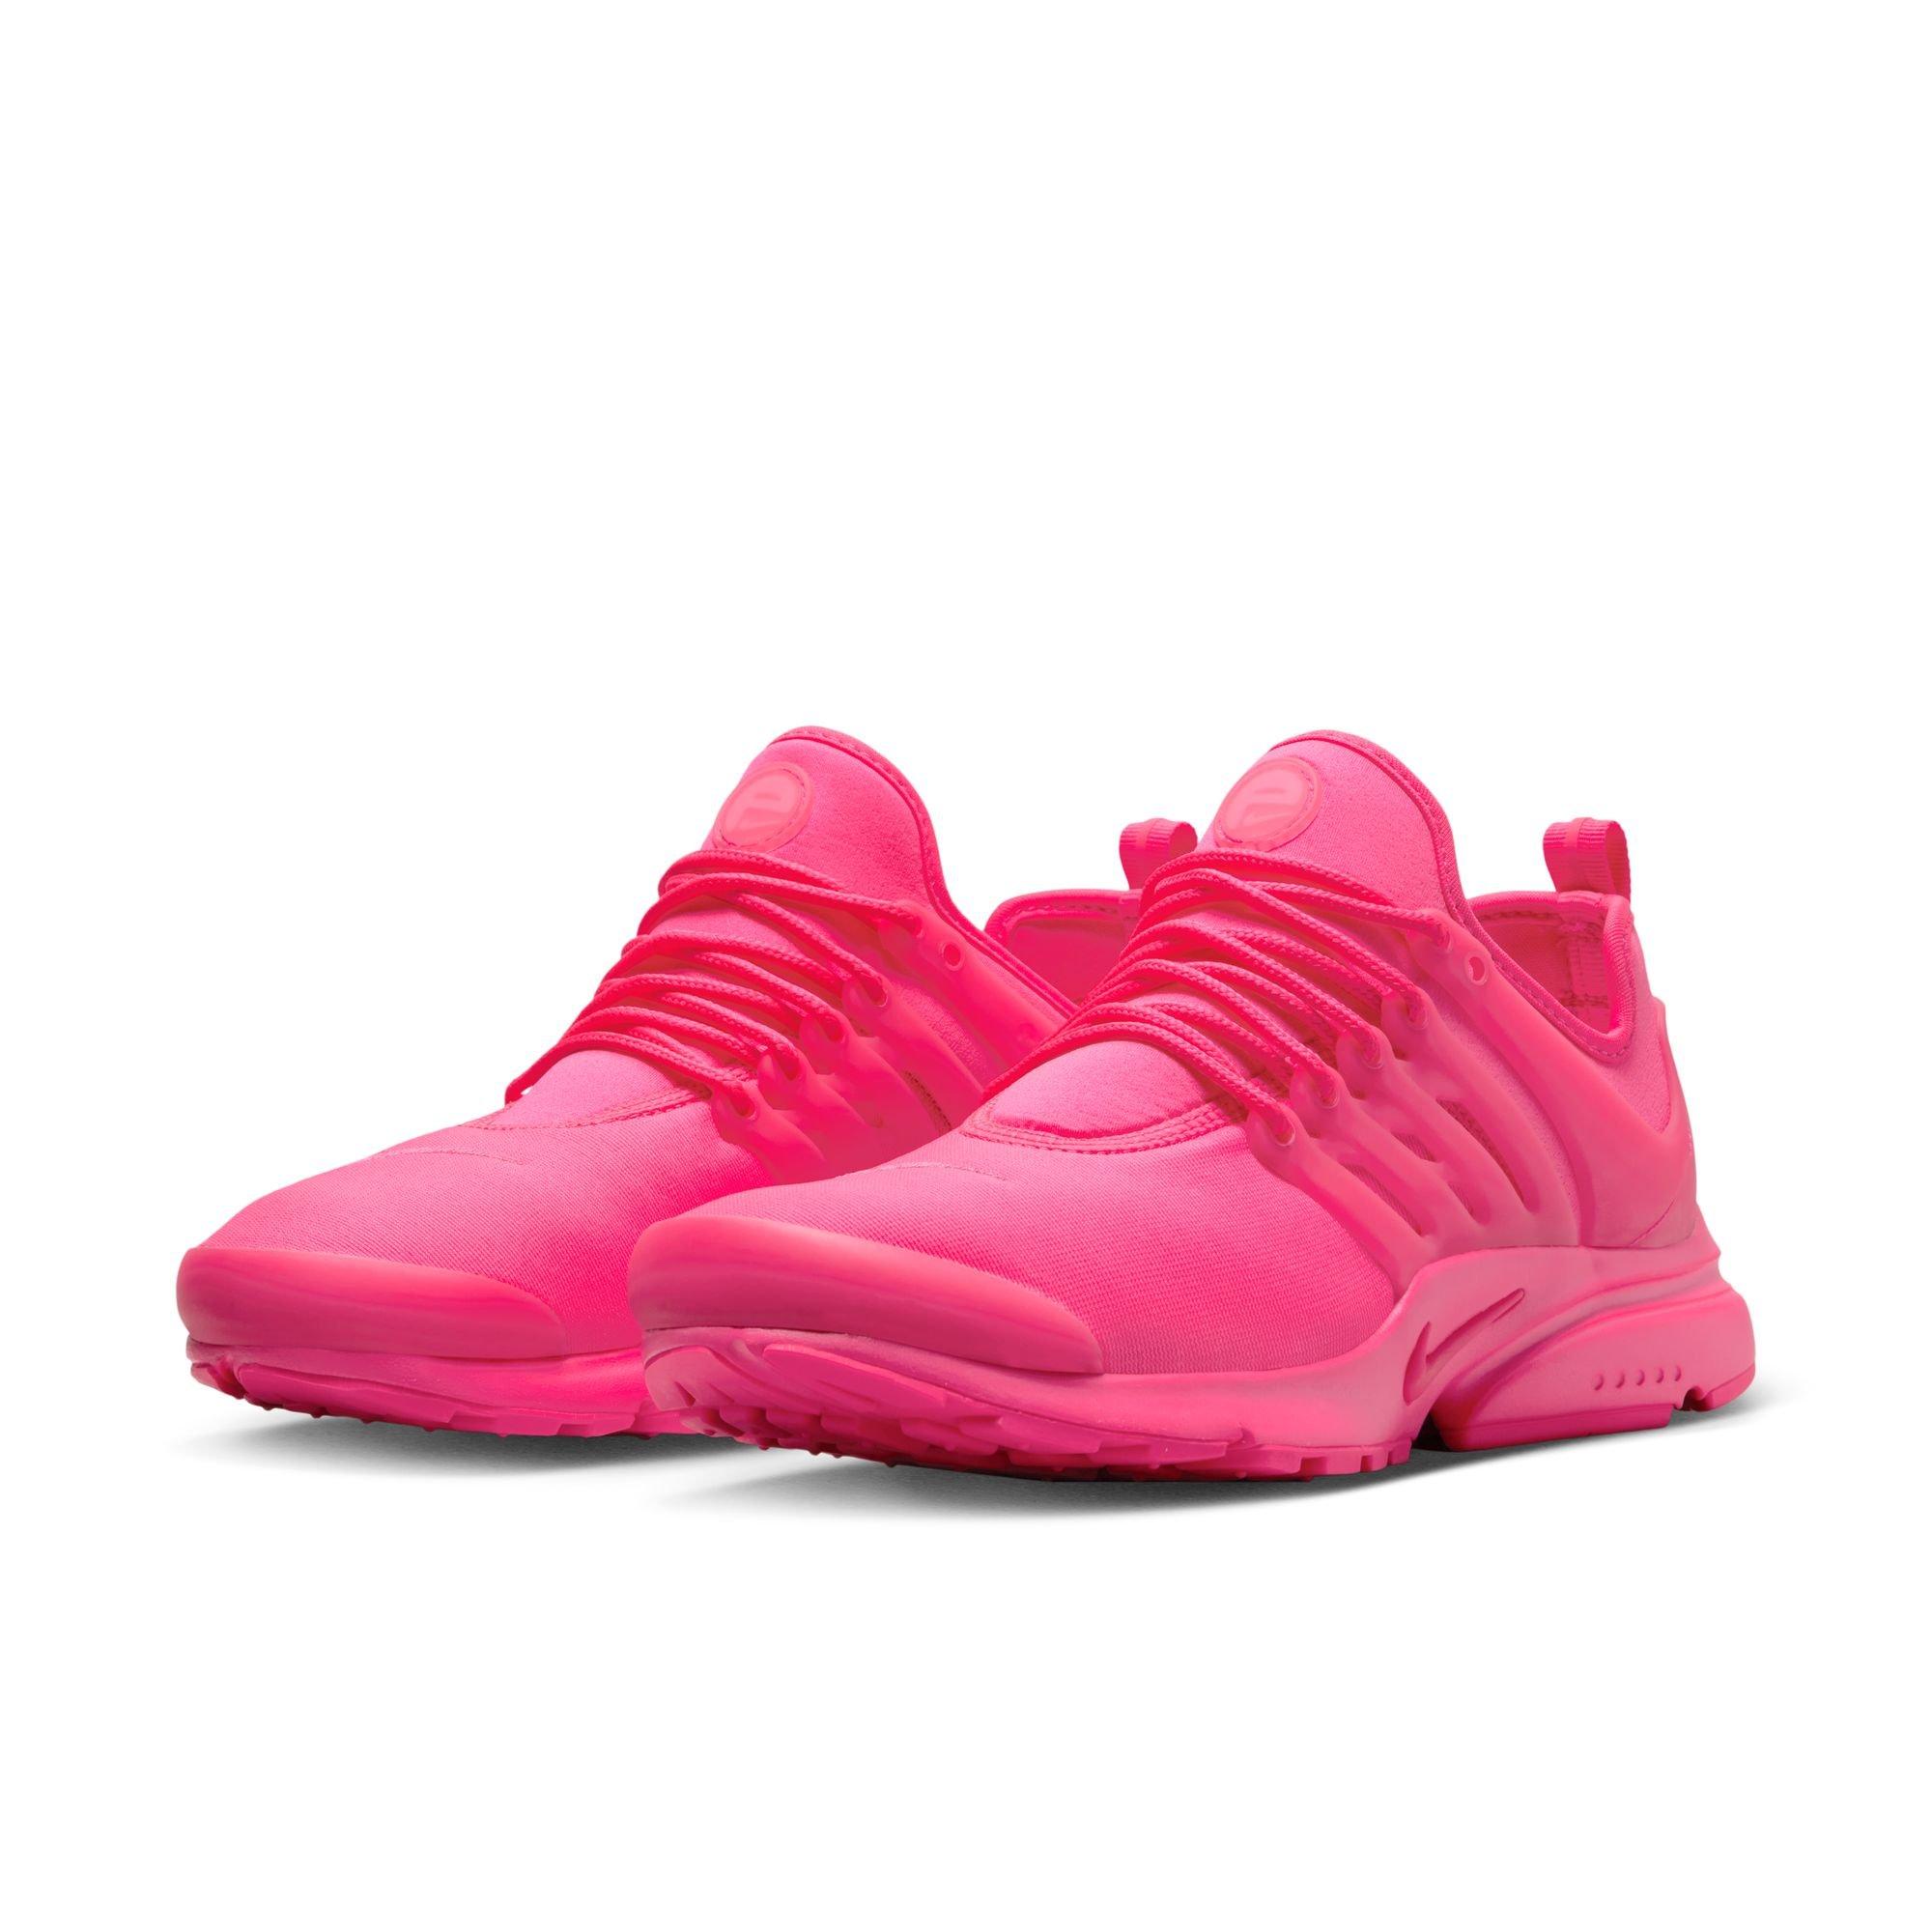 Santo ensalada Litoral Nike Air Presto "Hyper Pink" Women's Shoe